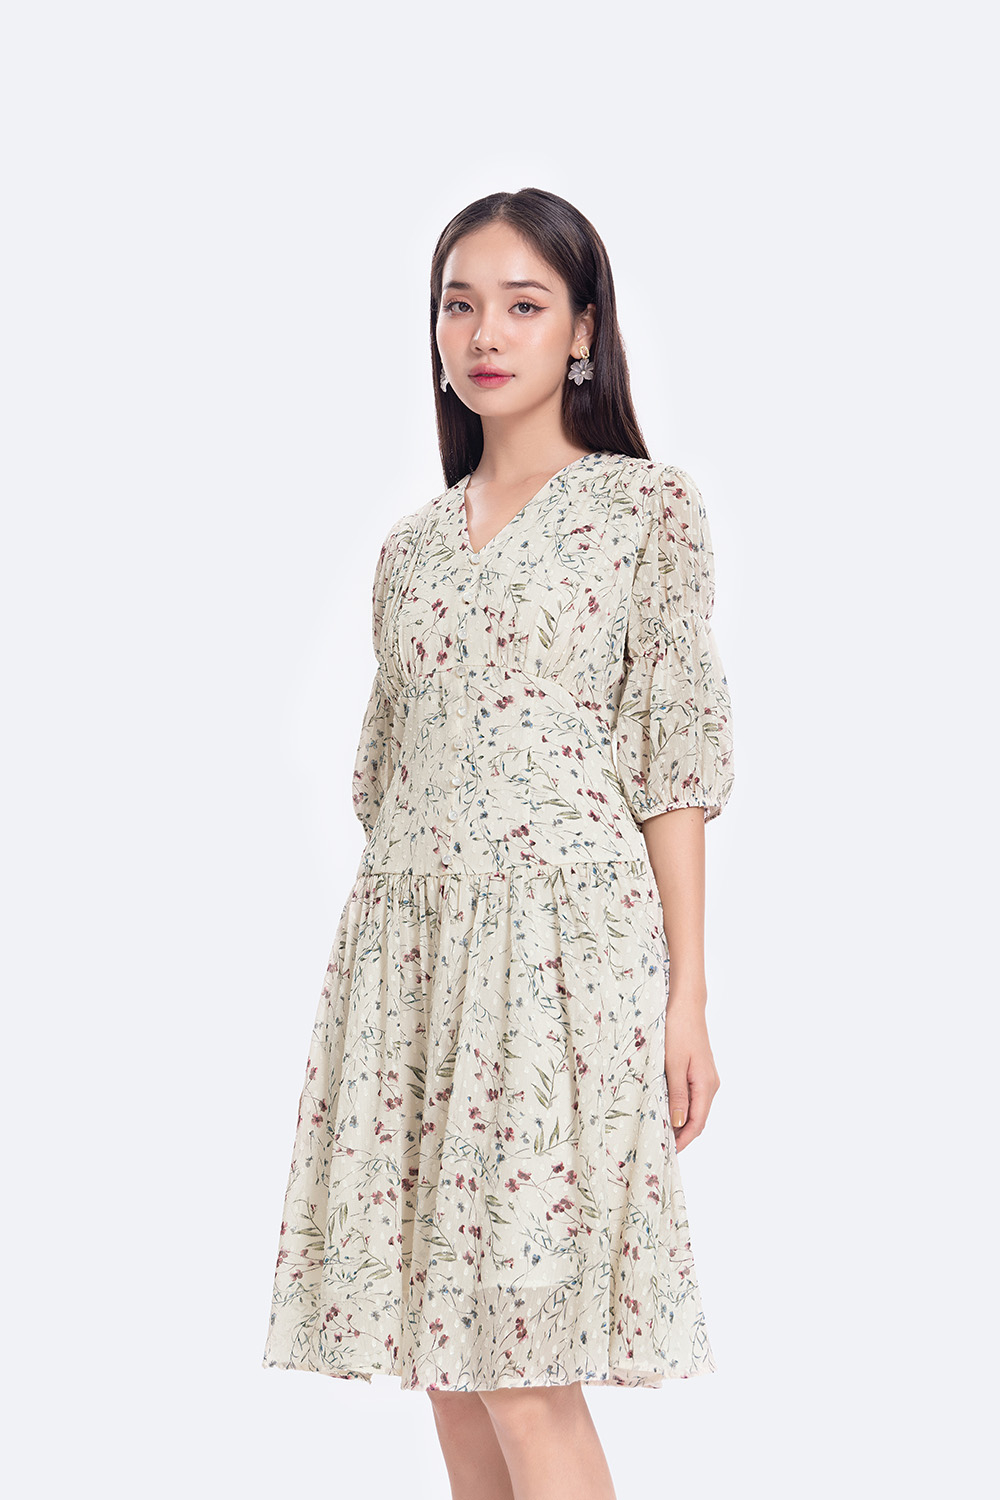 Váy hoa nhí cổ V 2021 - Đầm, váy nữ | ThờiTrangNữ.vn